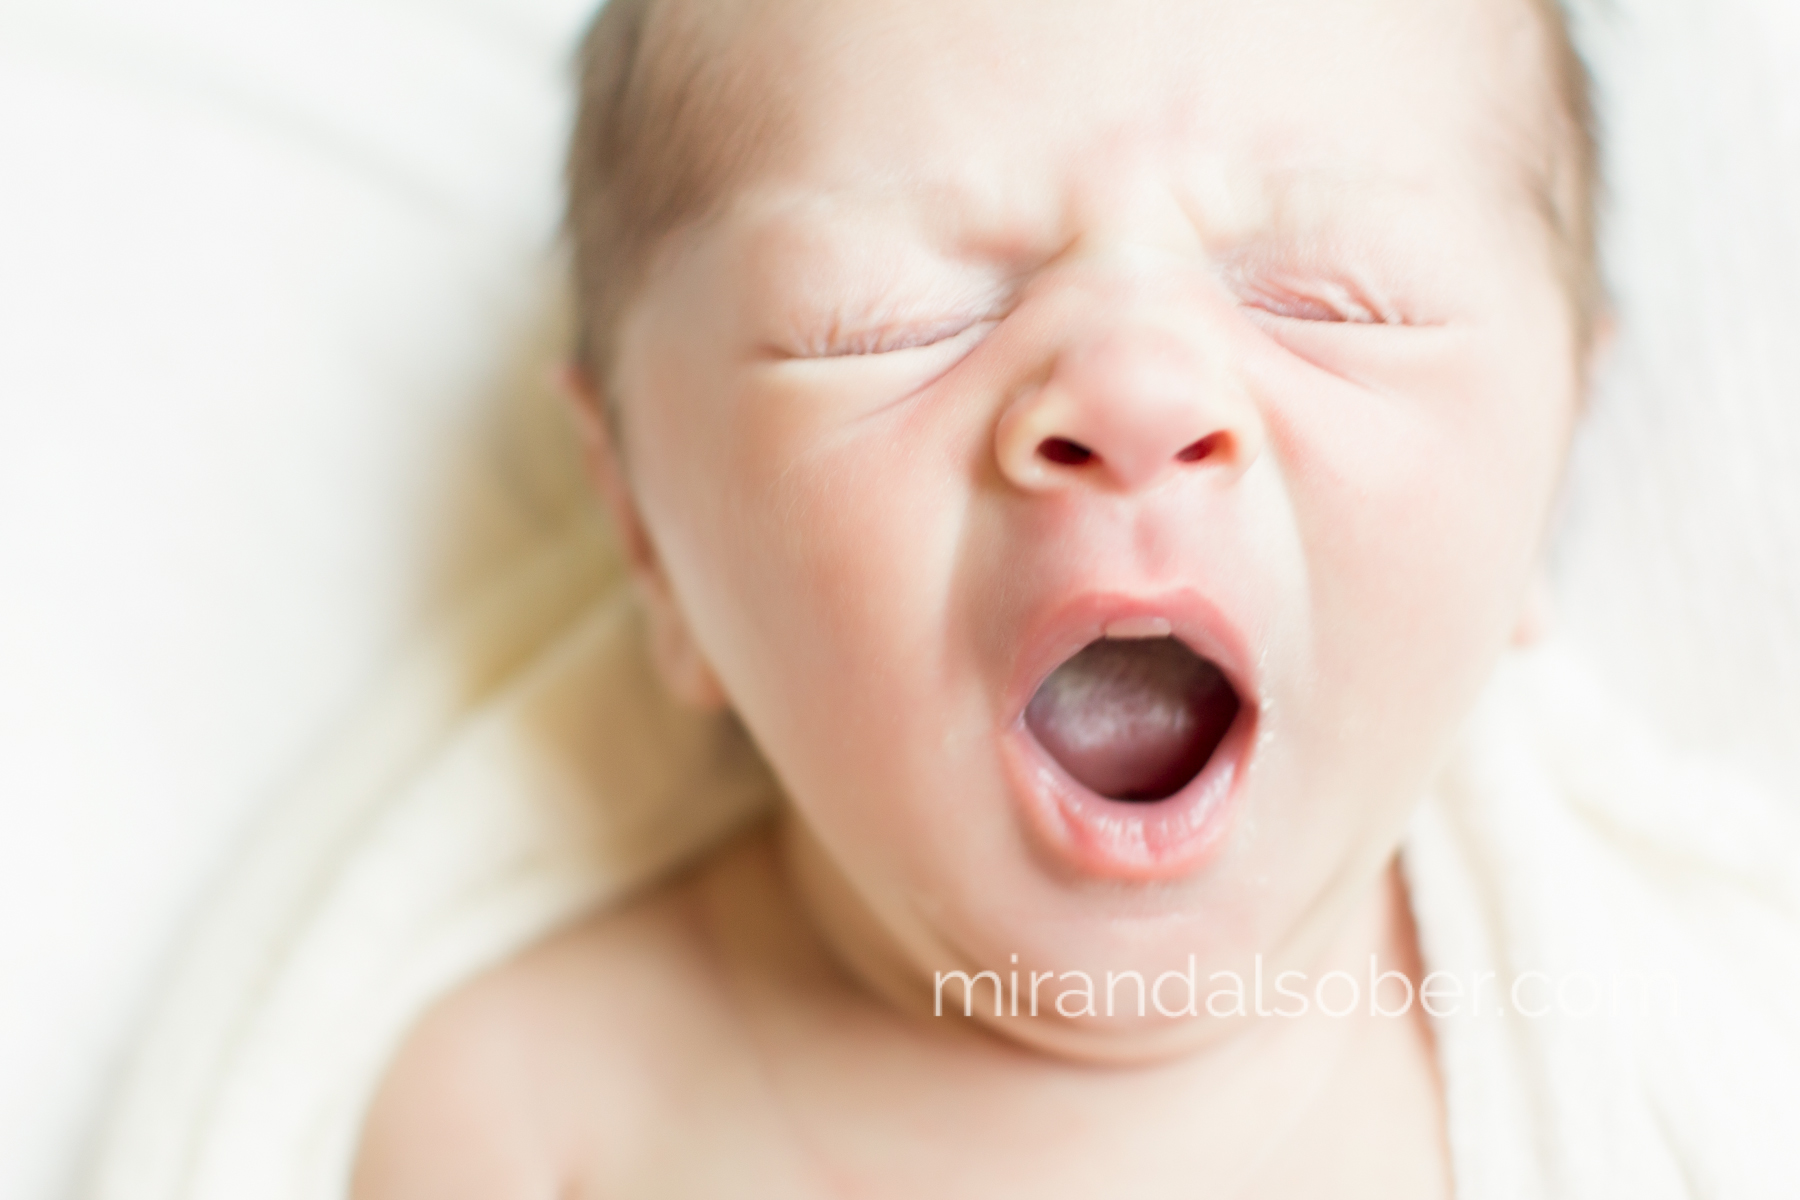 in-home newborn photos, Miranda L. Sober Photography, Fort Collins